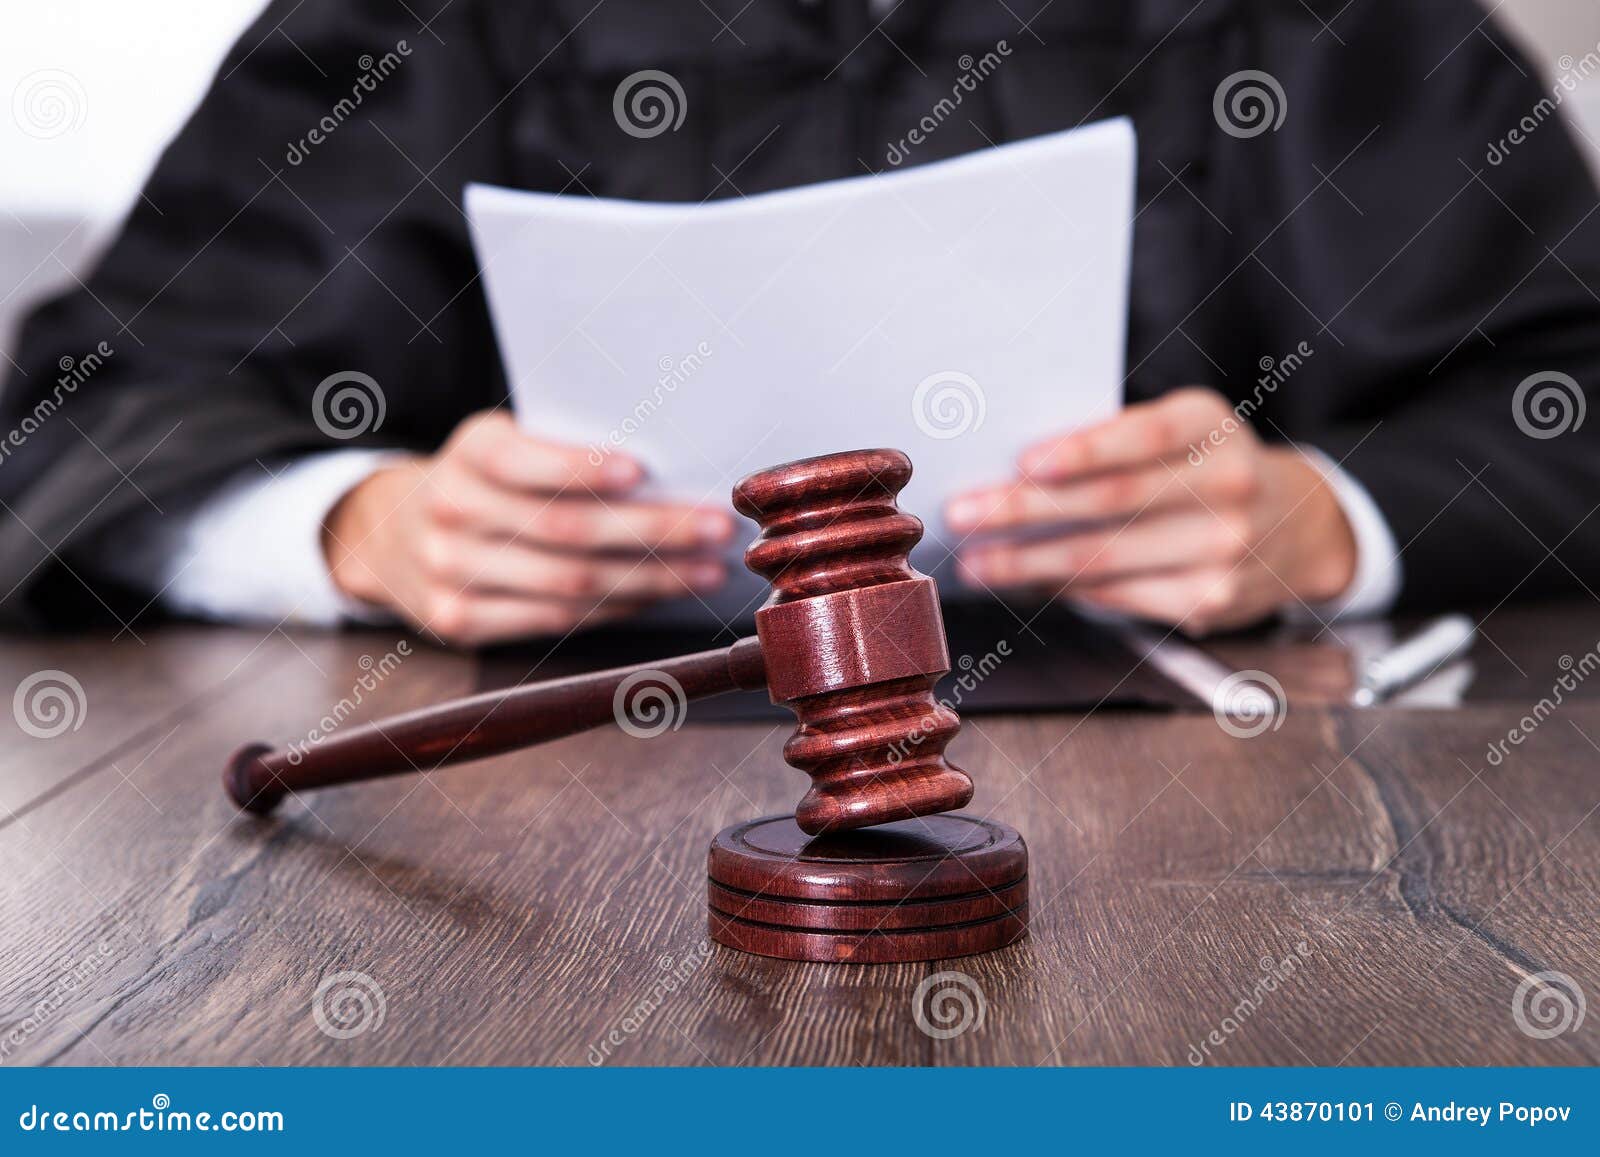 judge holding documents